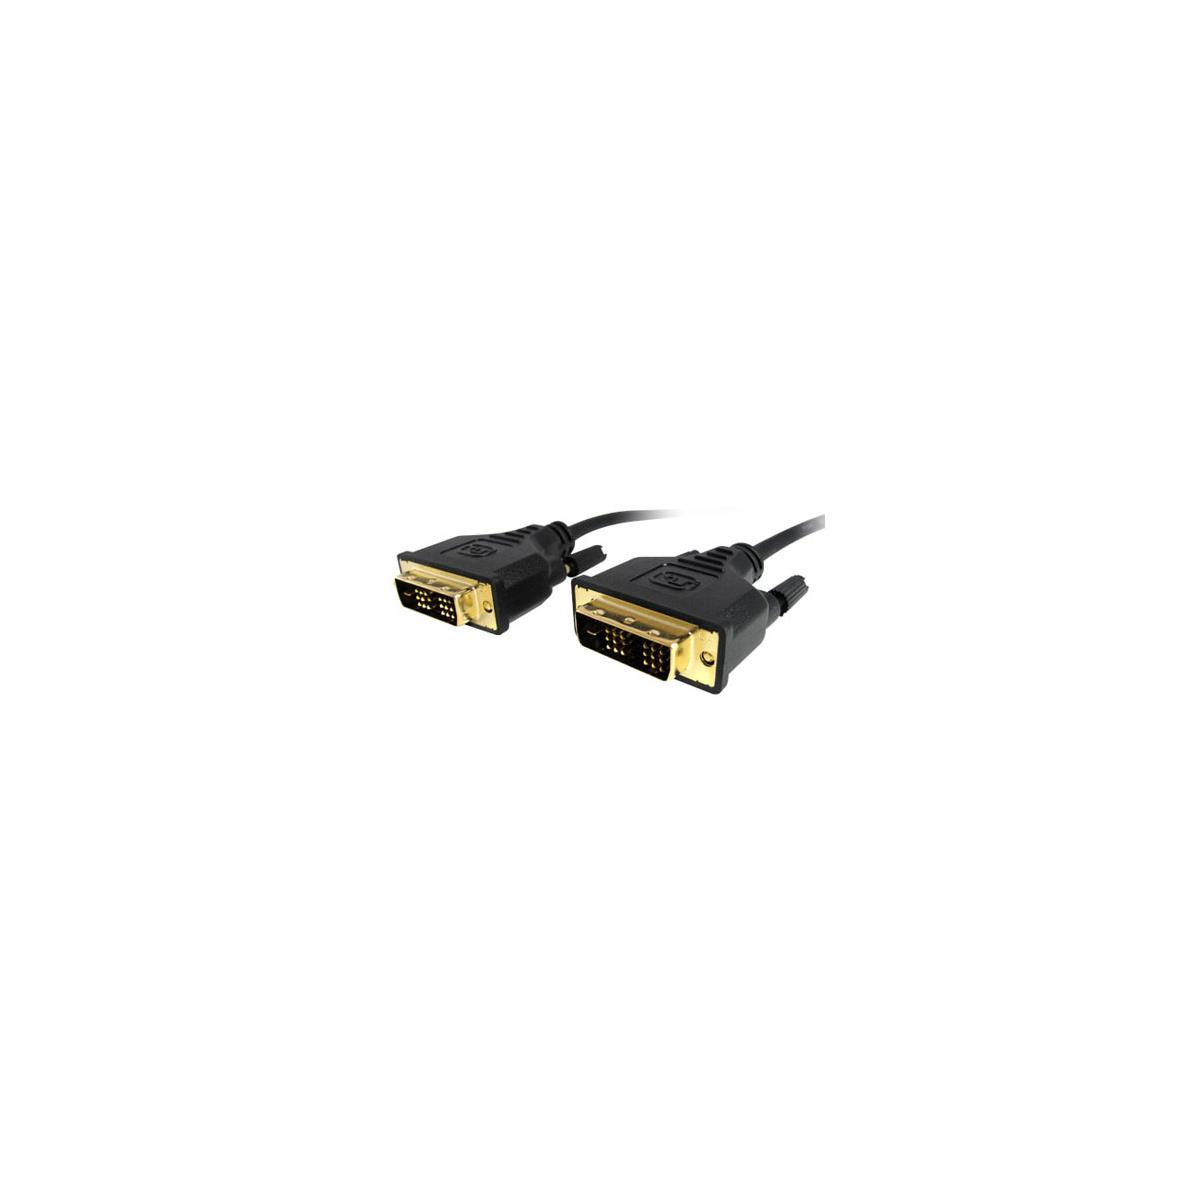 Image of Comprehensive 10' MicroFlex Low Profile DVI-D Male to DVI-D Male Cable